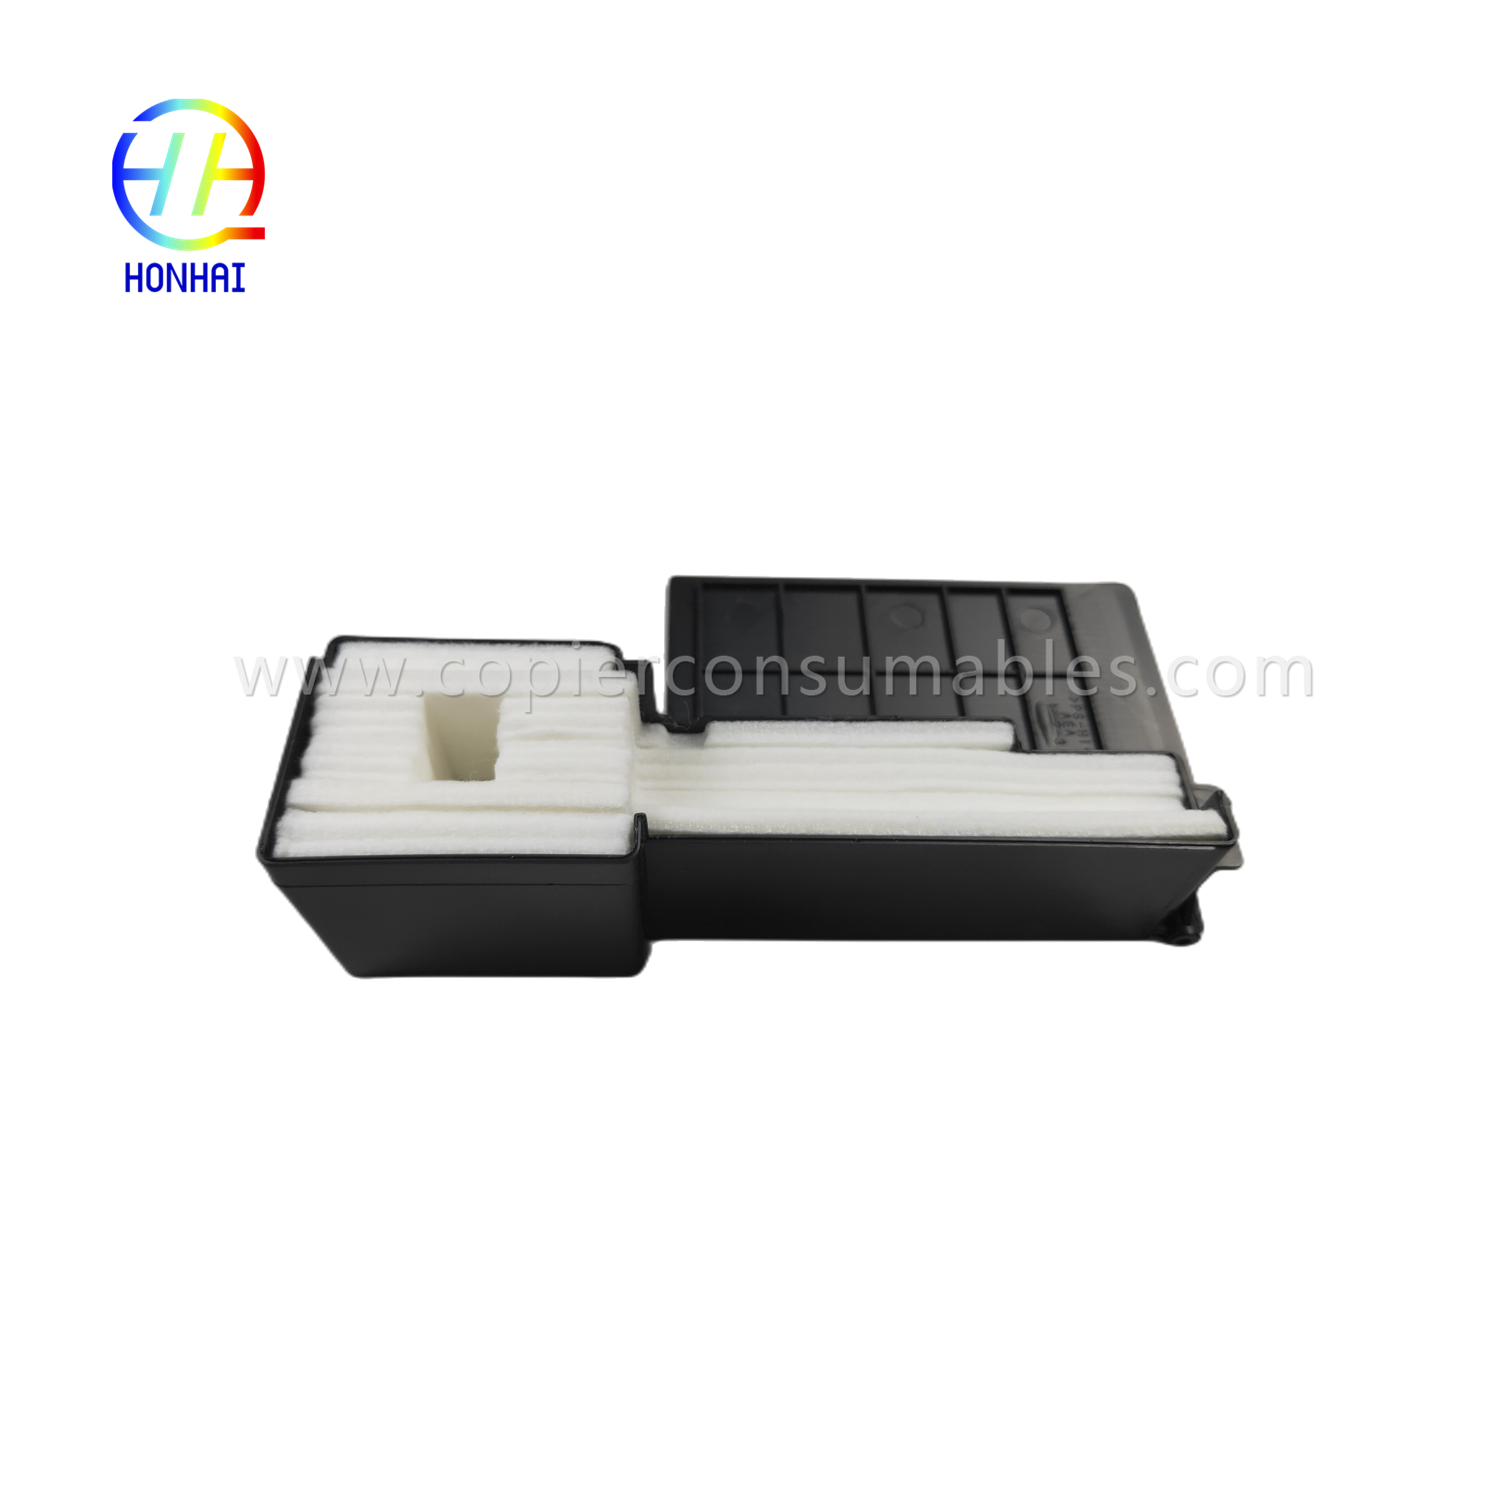 Afval-inkblokkiepak vir Epson L220 L360 L380-drukker